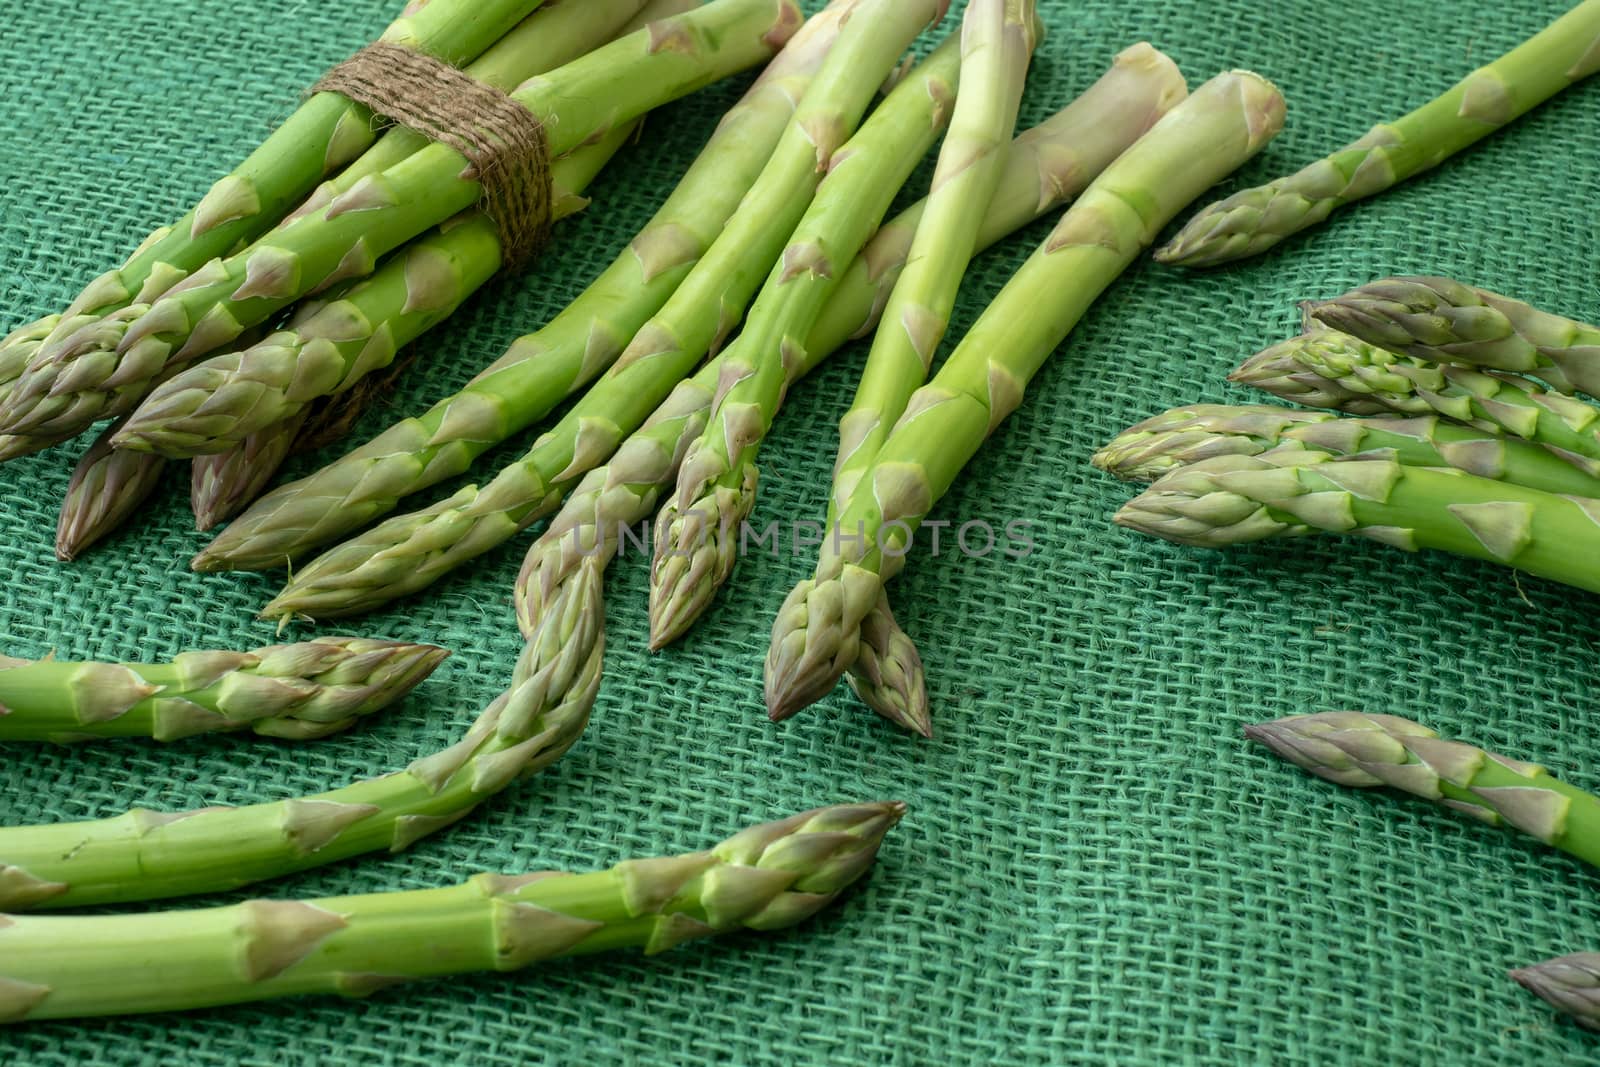 Raw garden asparagus stems. Fresh green spring vegetables on gre by xtrekx